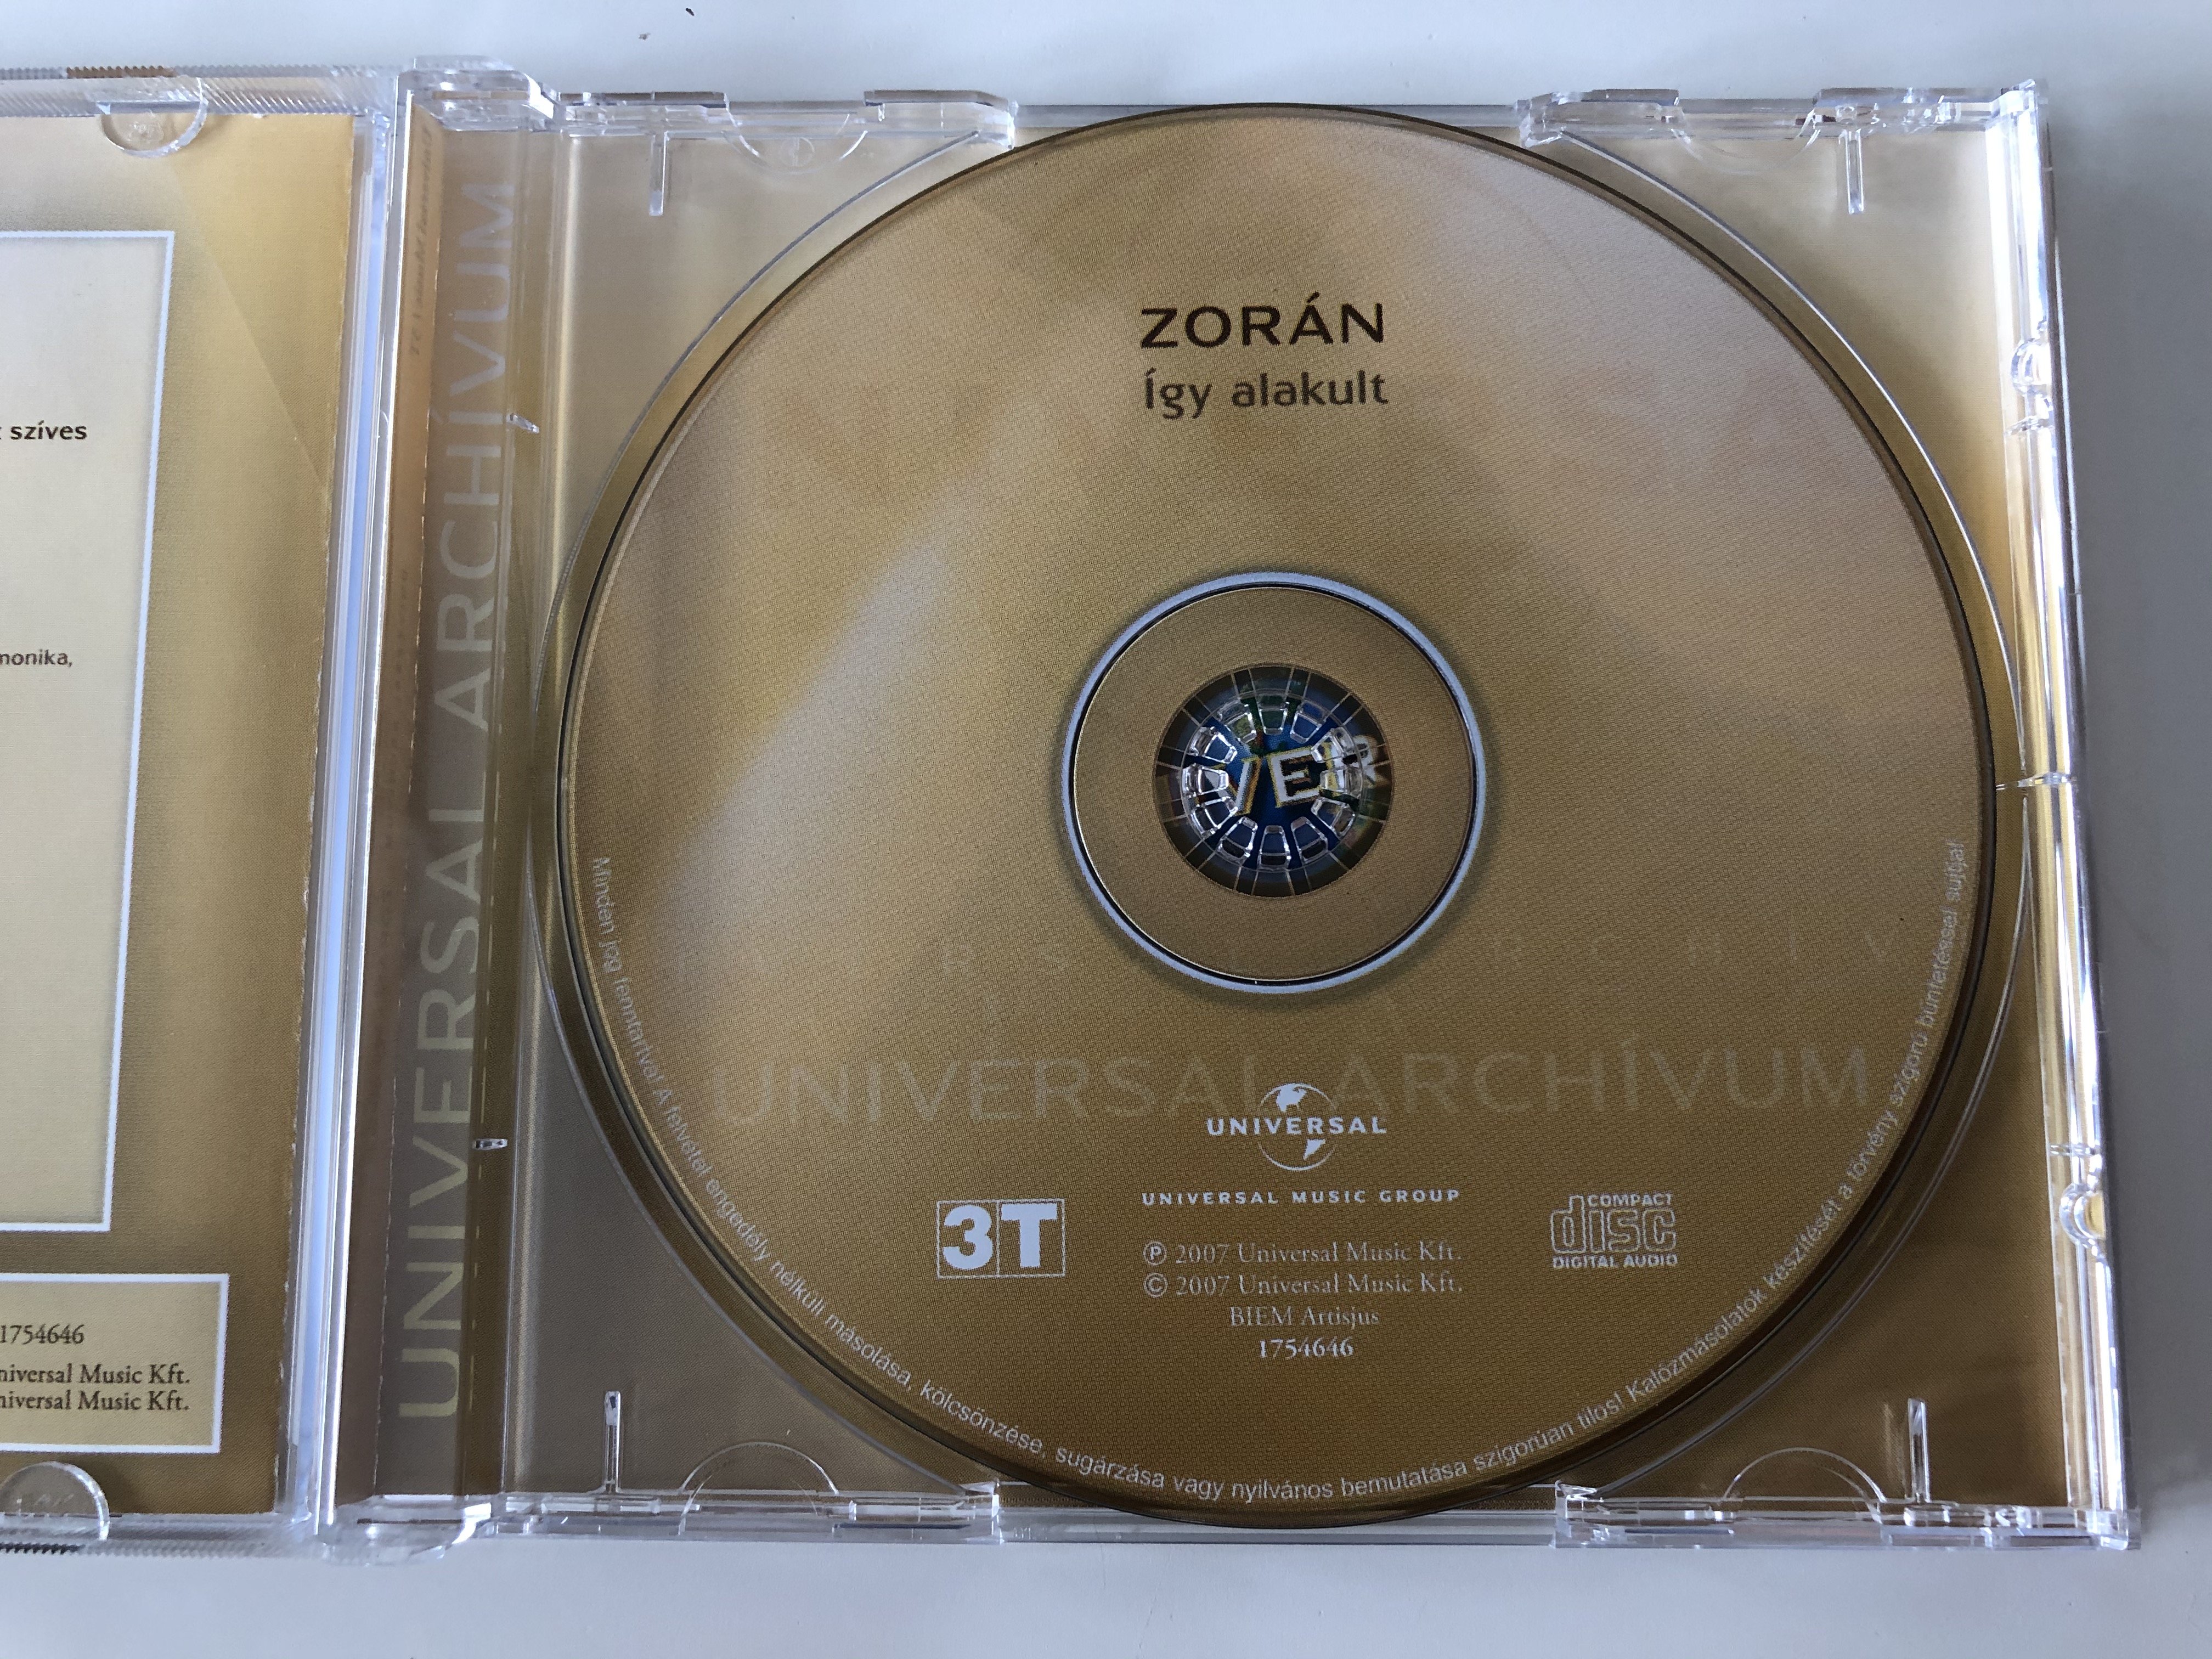 zor-n-gy-alakult-universal-music-kft.-audio-cd-2007-1754646-4-.jpg